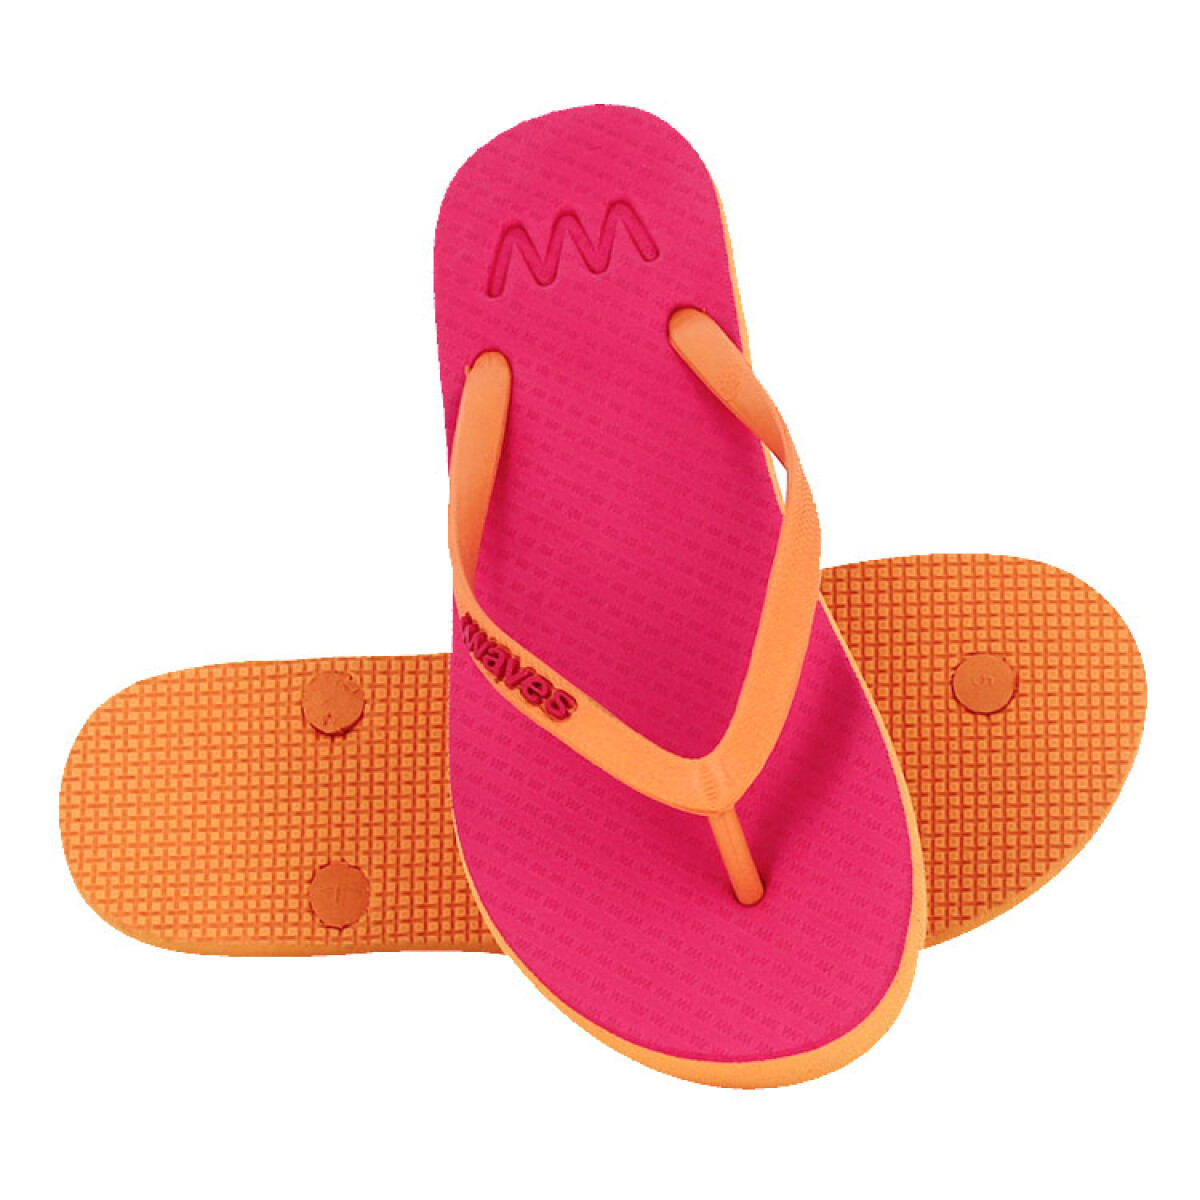 Sandalias Ojotas De Mujer Flip Flops Waves - Rosa y Naranja 